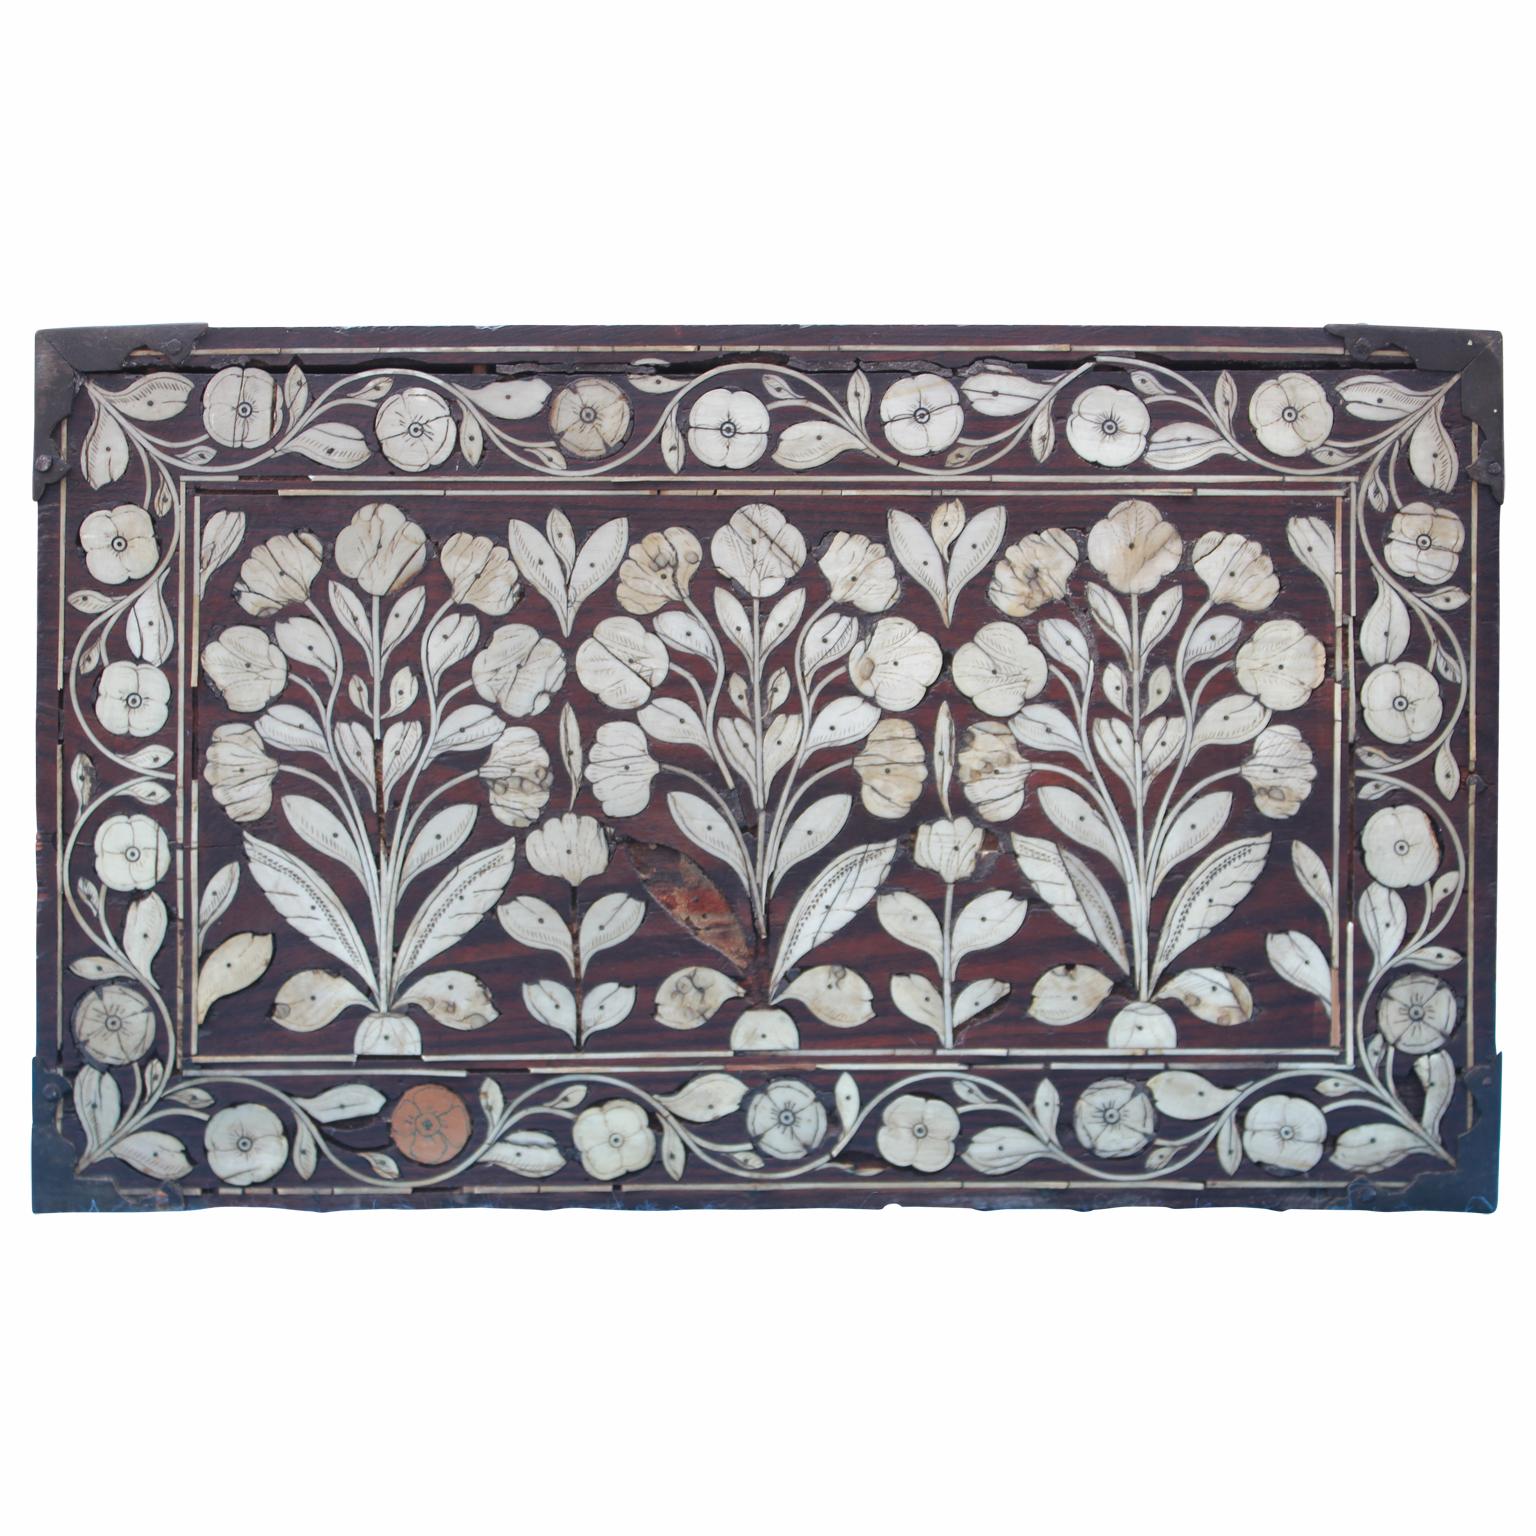 17th Century Beautiful Indo-Portuguese Mughal India Bone-Inlaid Fall Front Cabinet Box